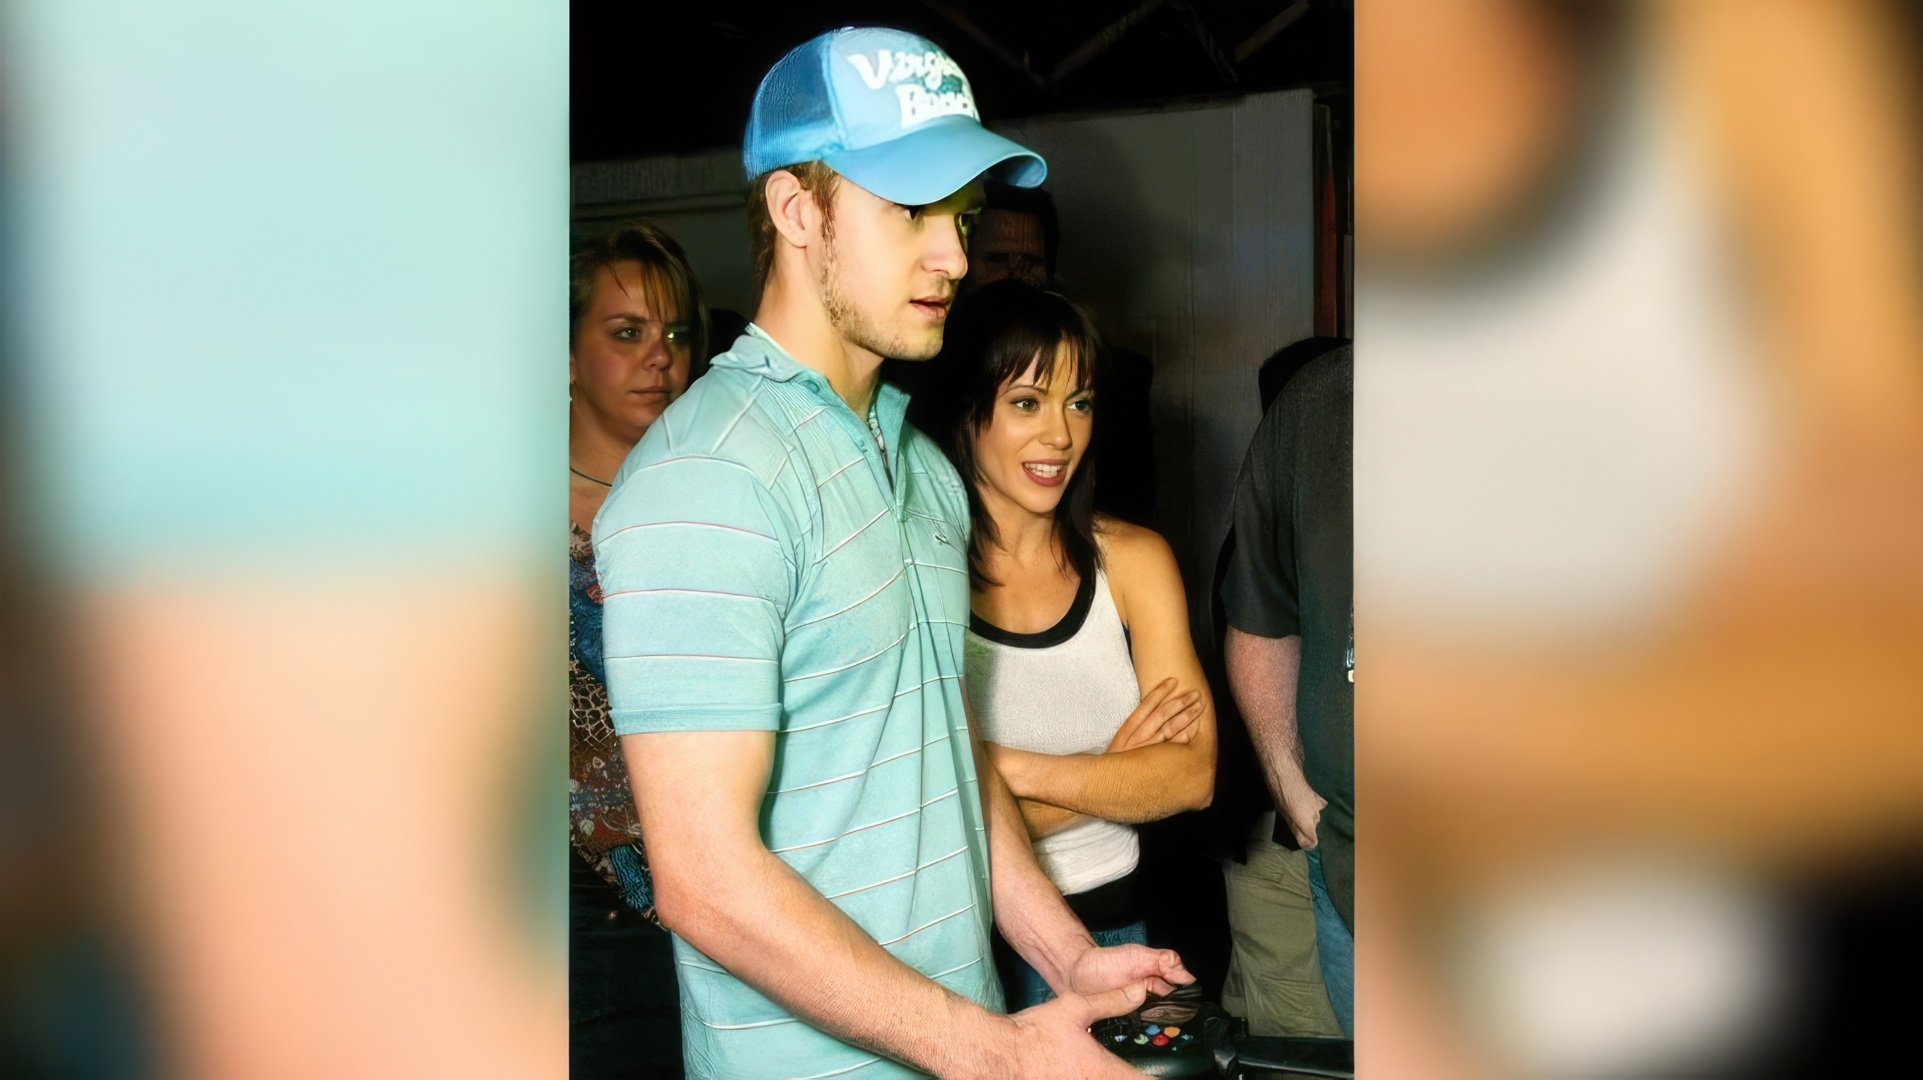 Alyssa Milano and Justin Timberlake dated